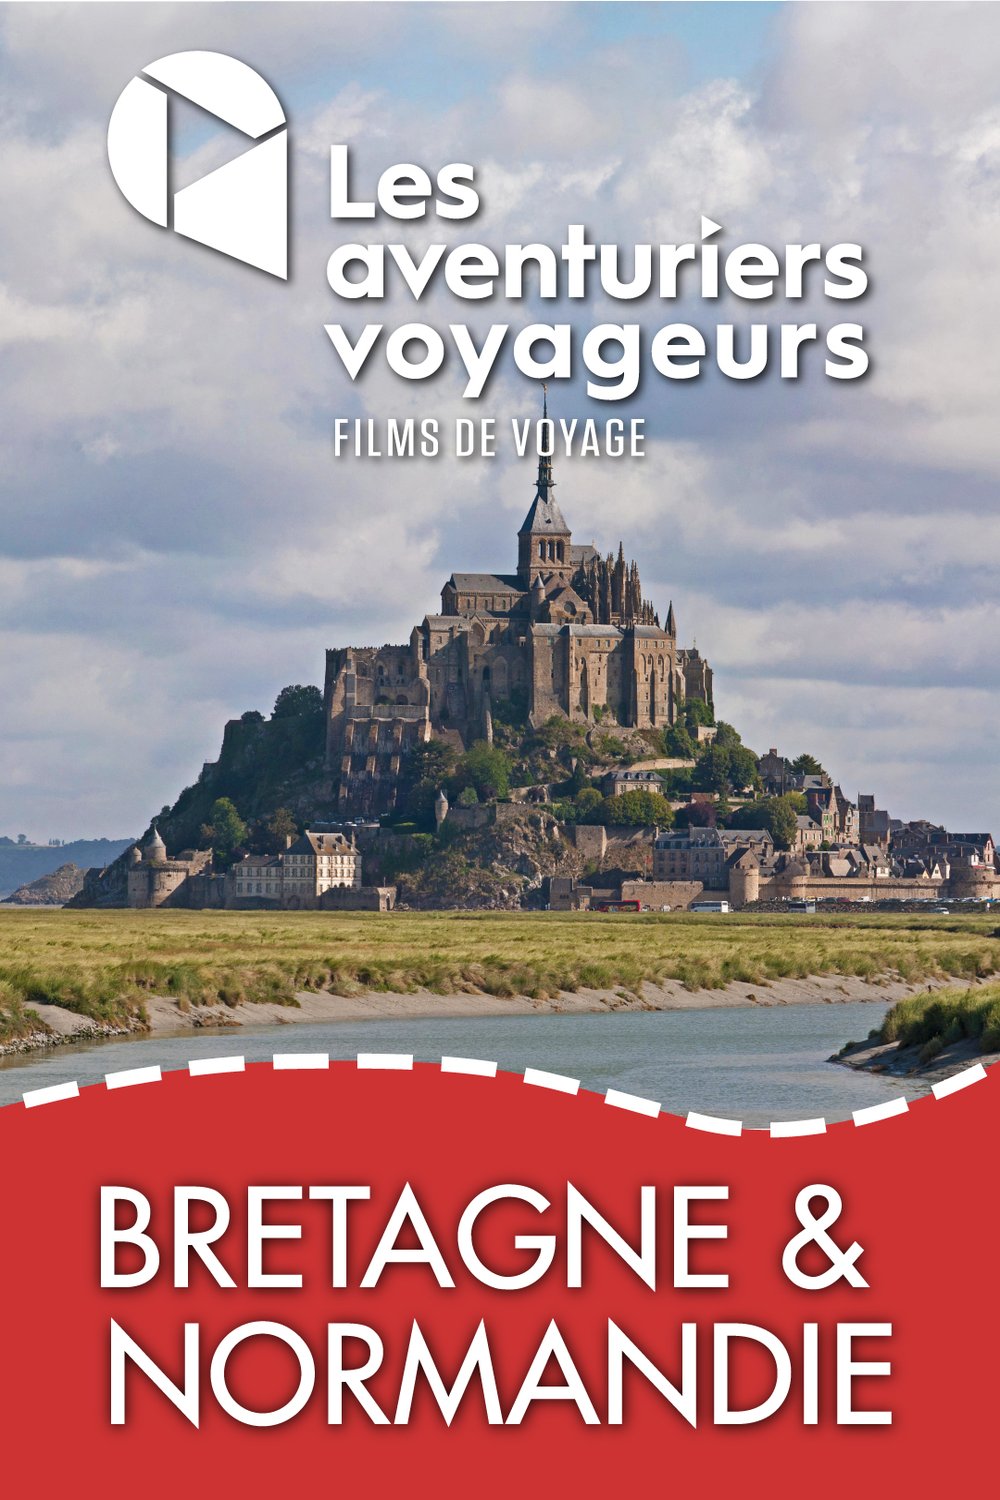 Poster of the movie Les aventuriers voyageurs: Bretagne et Normandie